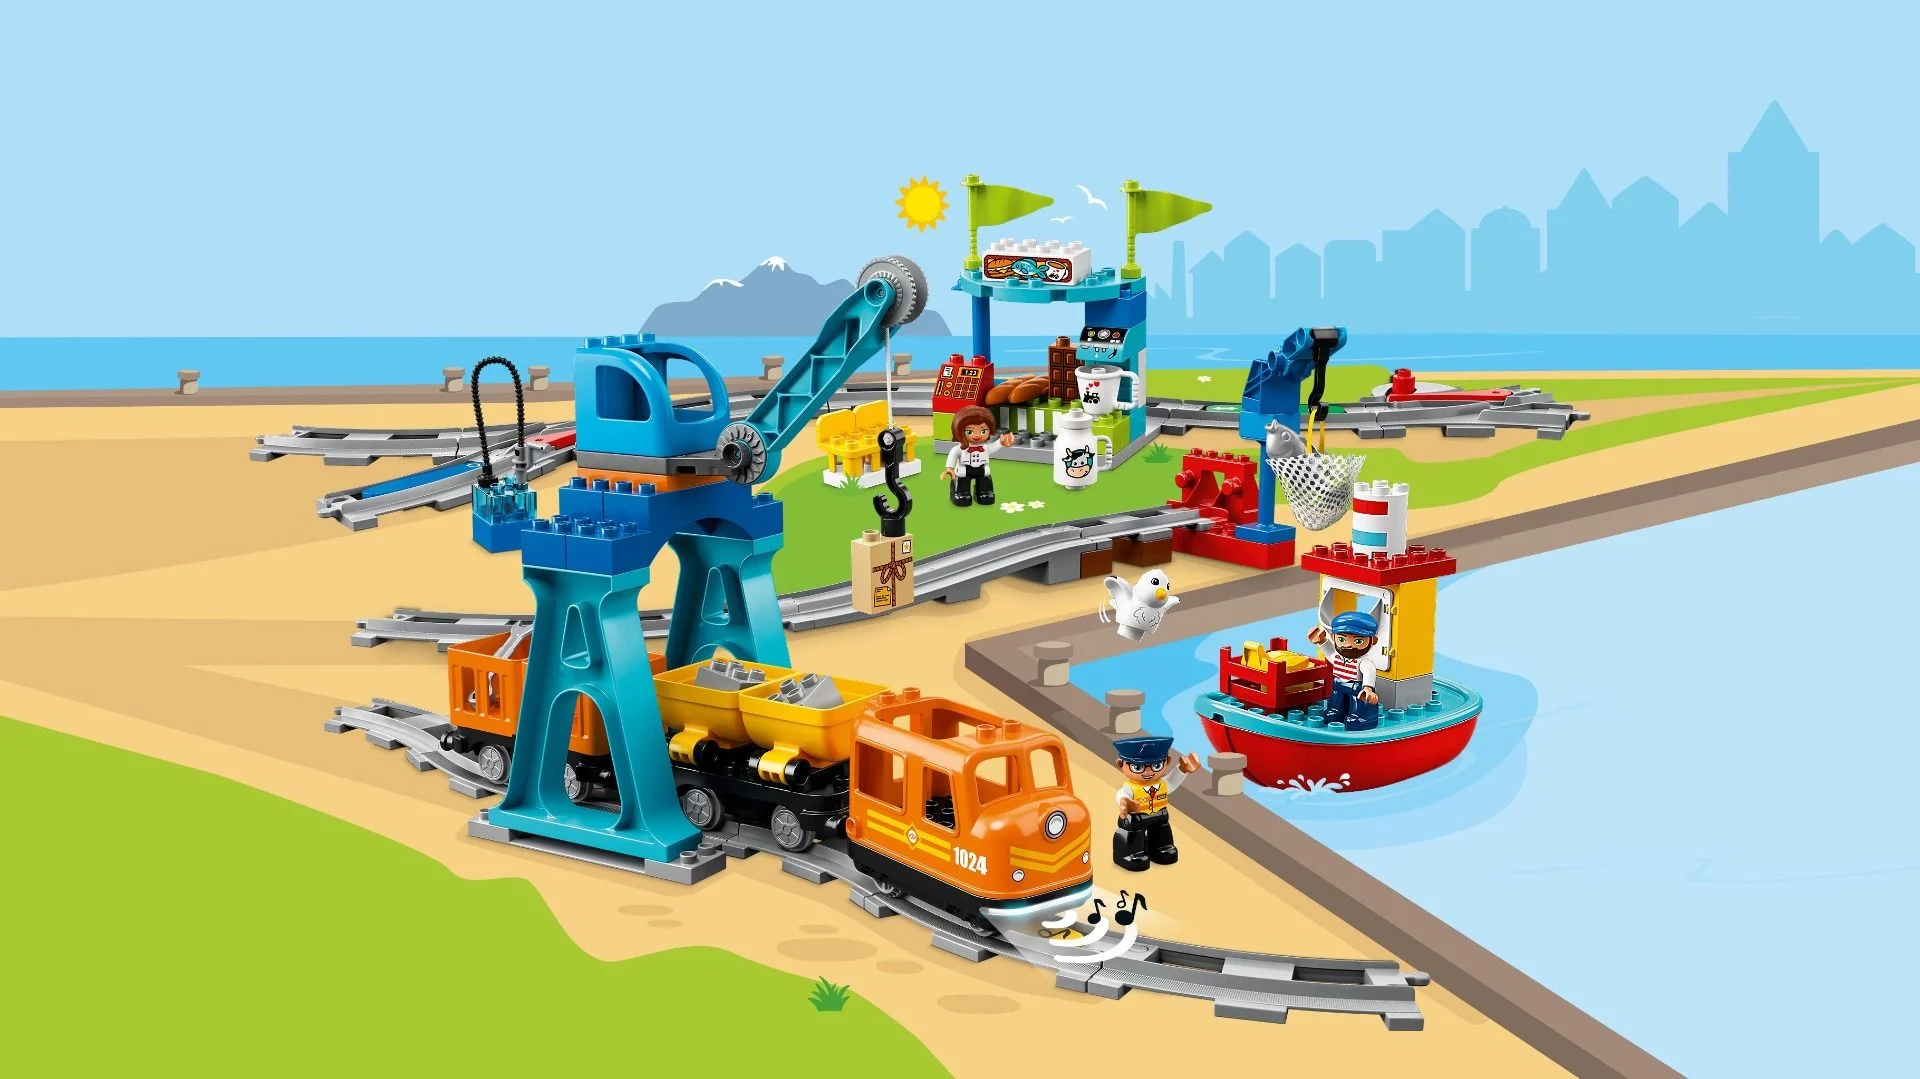 LEGO DUPLO Cargo Train